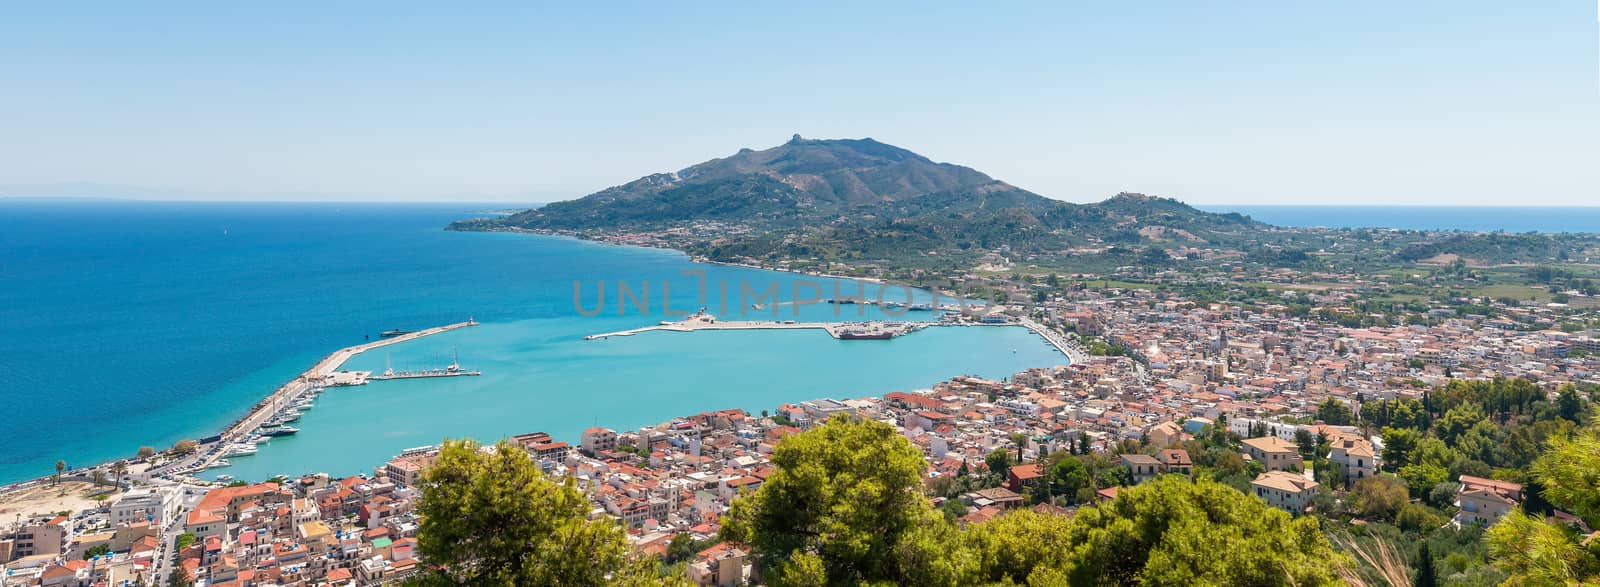 Panoramic view of Zante town, capital city of Zakynthos, Greece